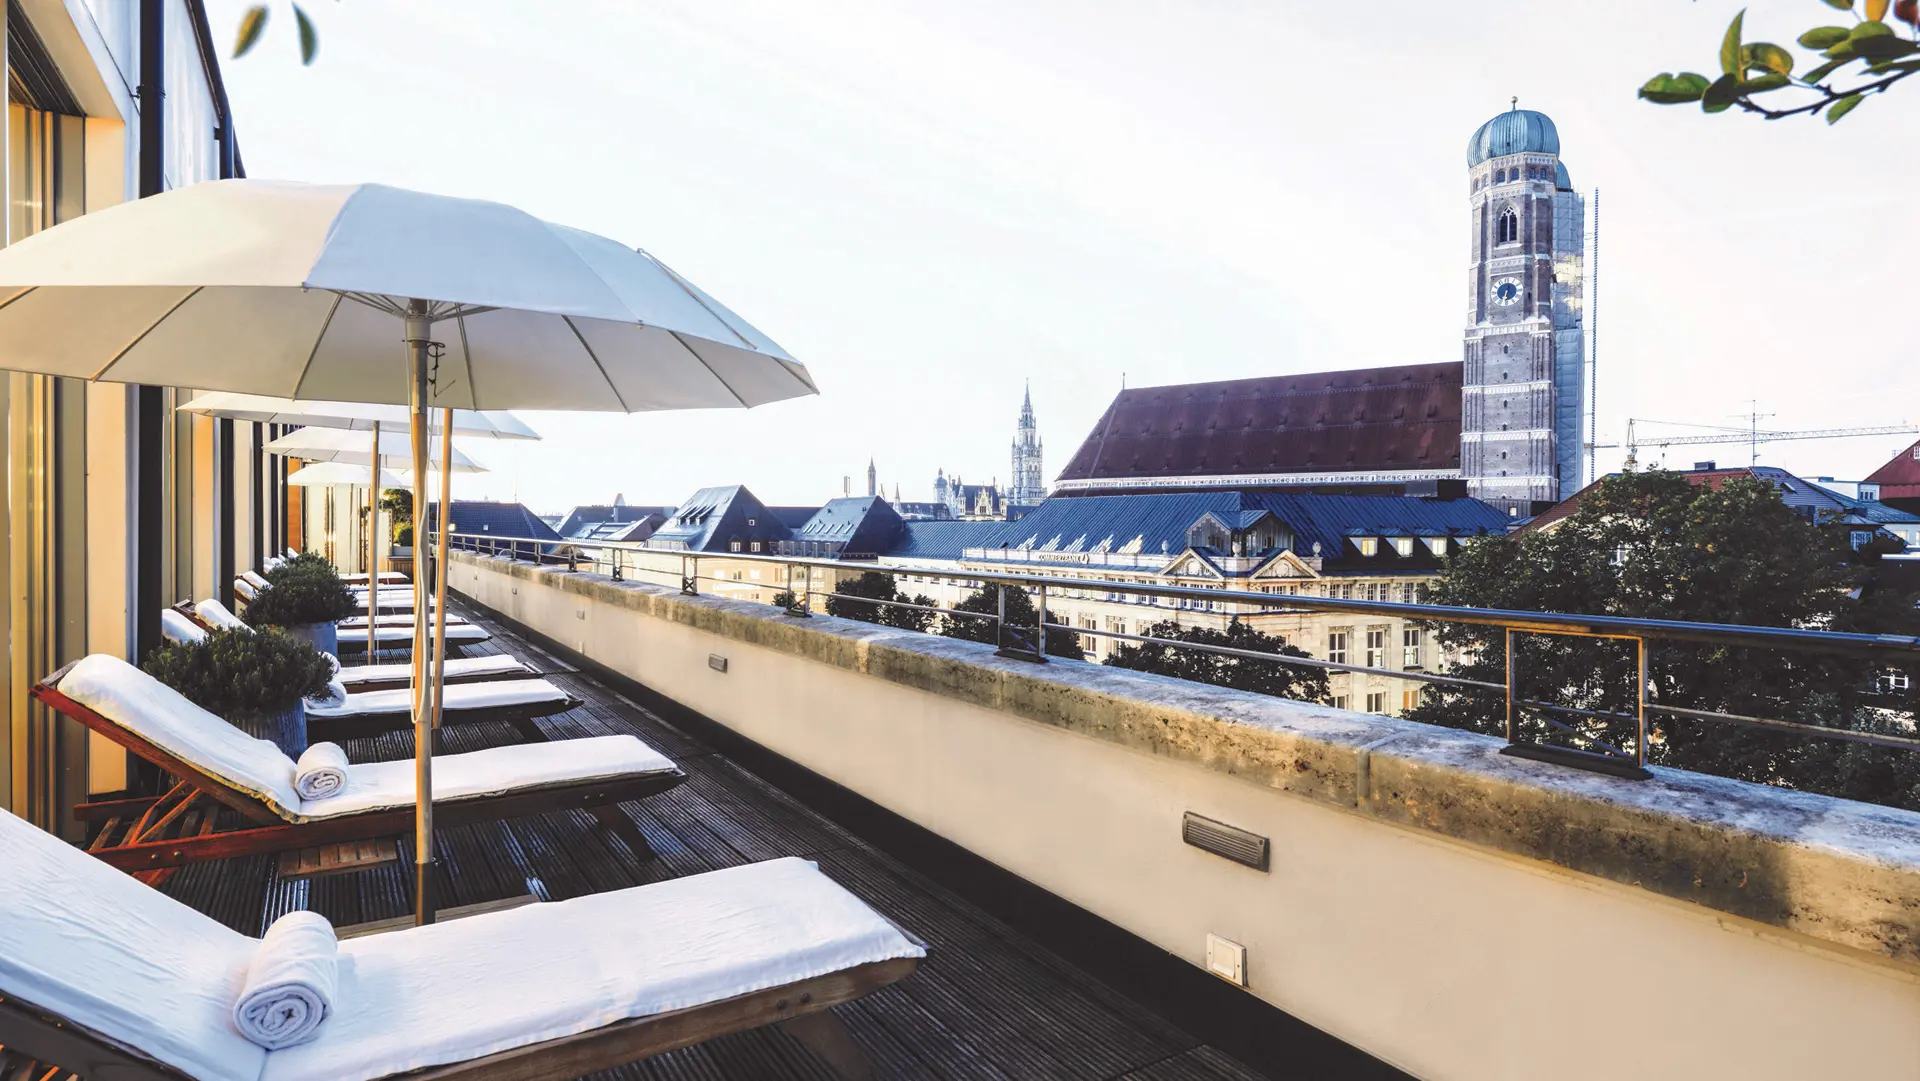 Hotel review Service & Facilities' - Bayerischer Hof - 1